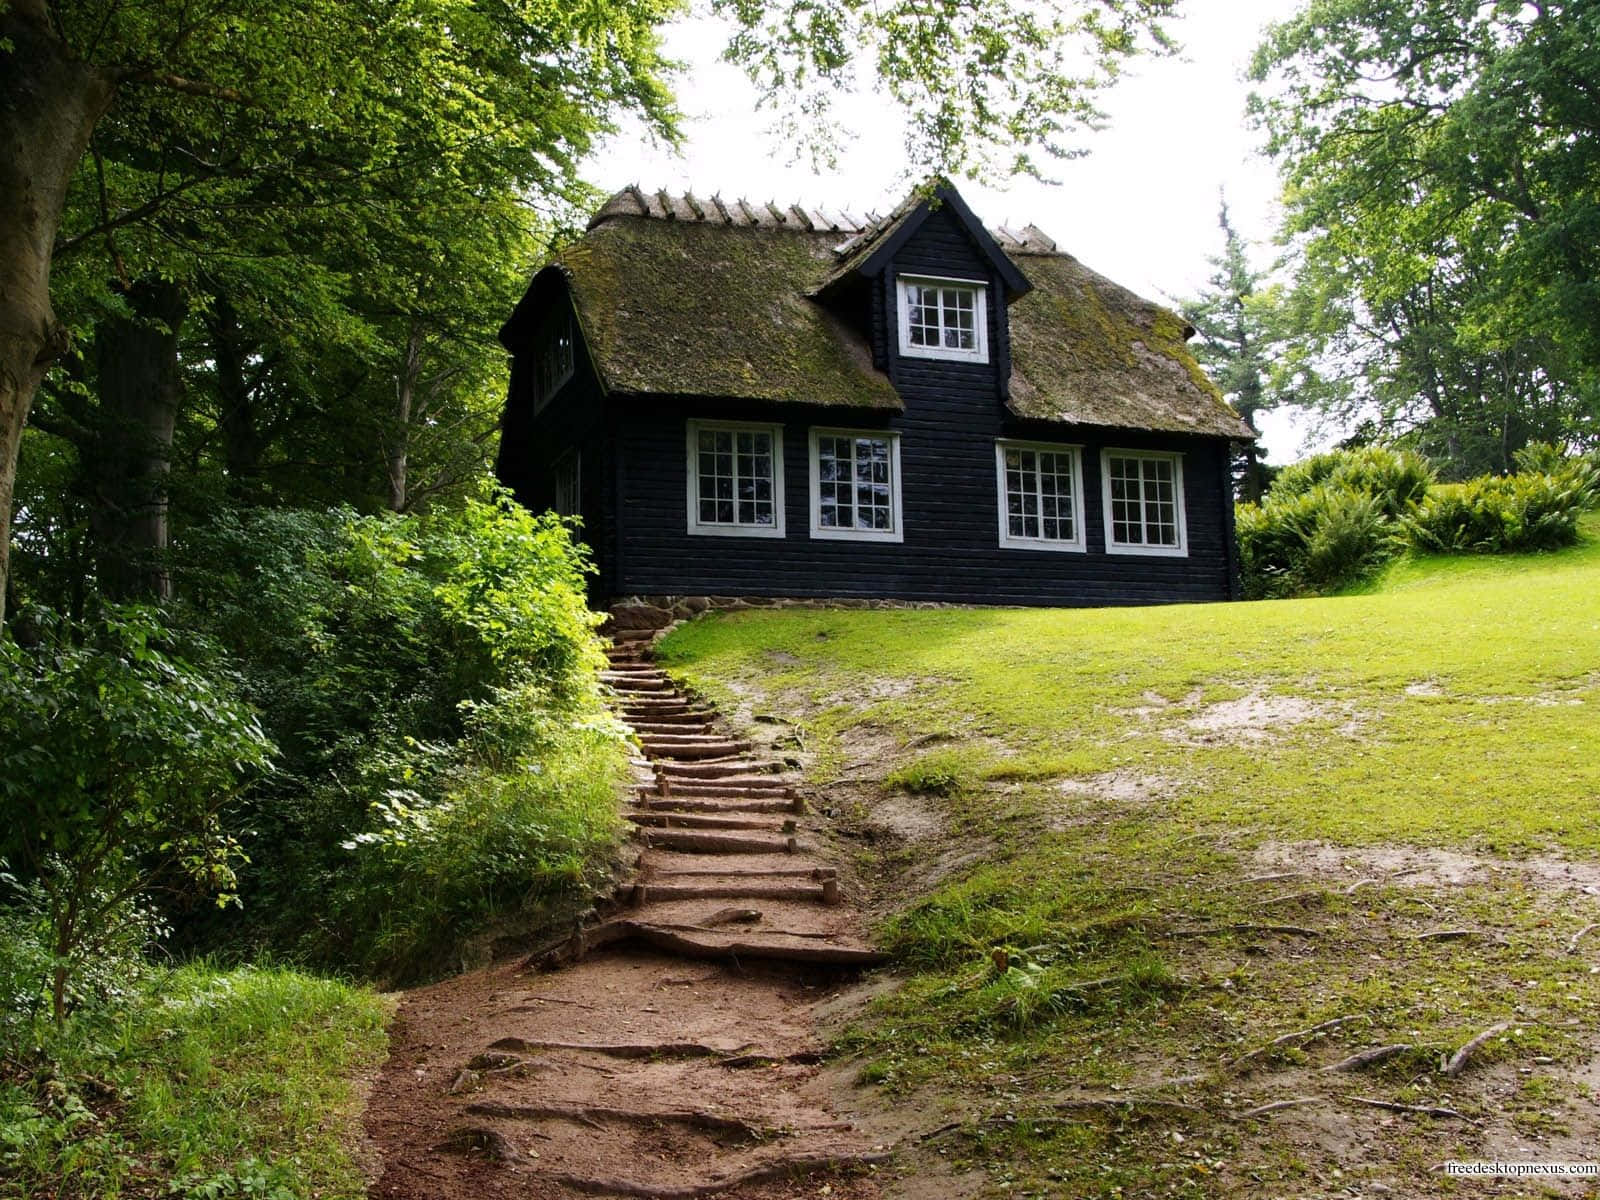 Enjoy a beautiful homely landscape surrounding a classic farmhouse. Wallpaper